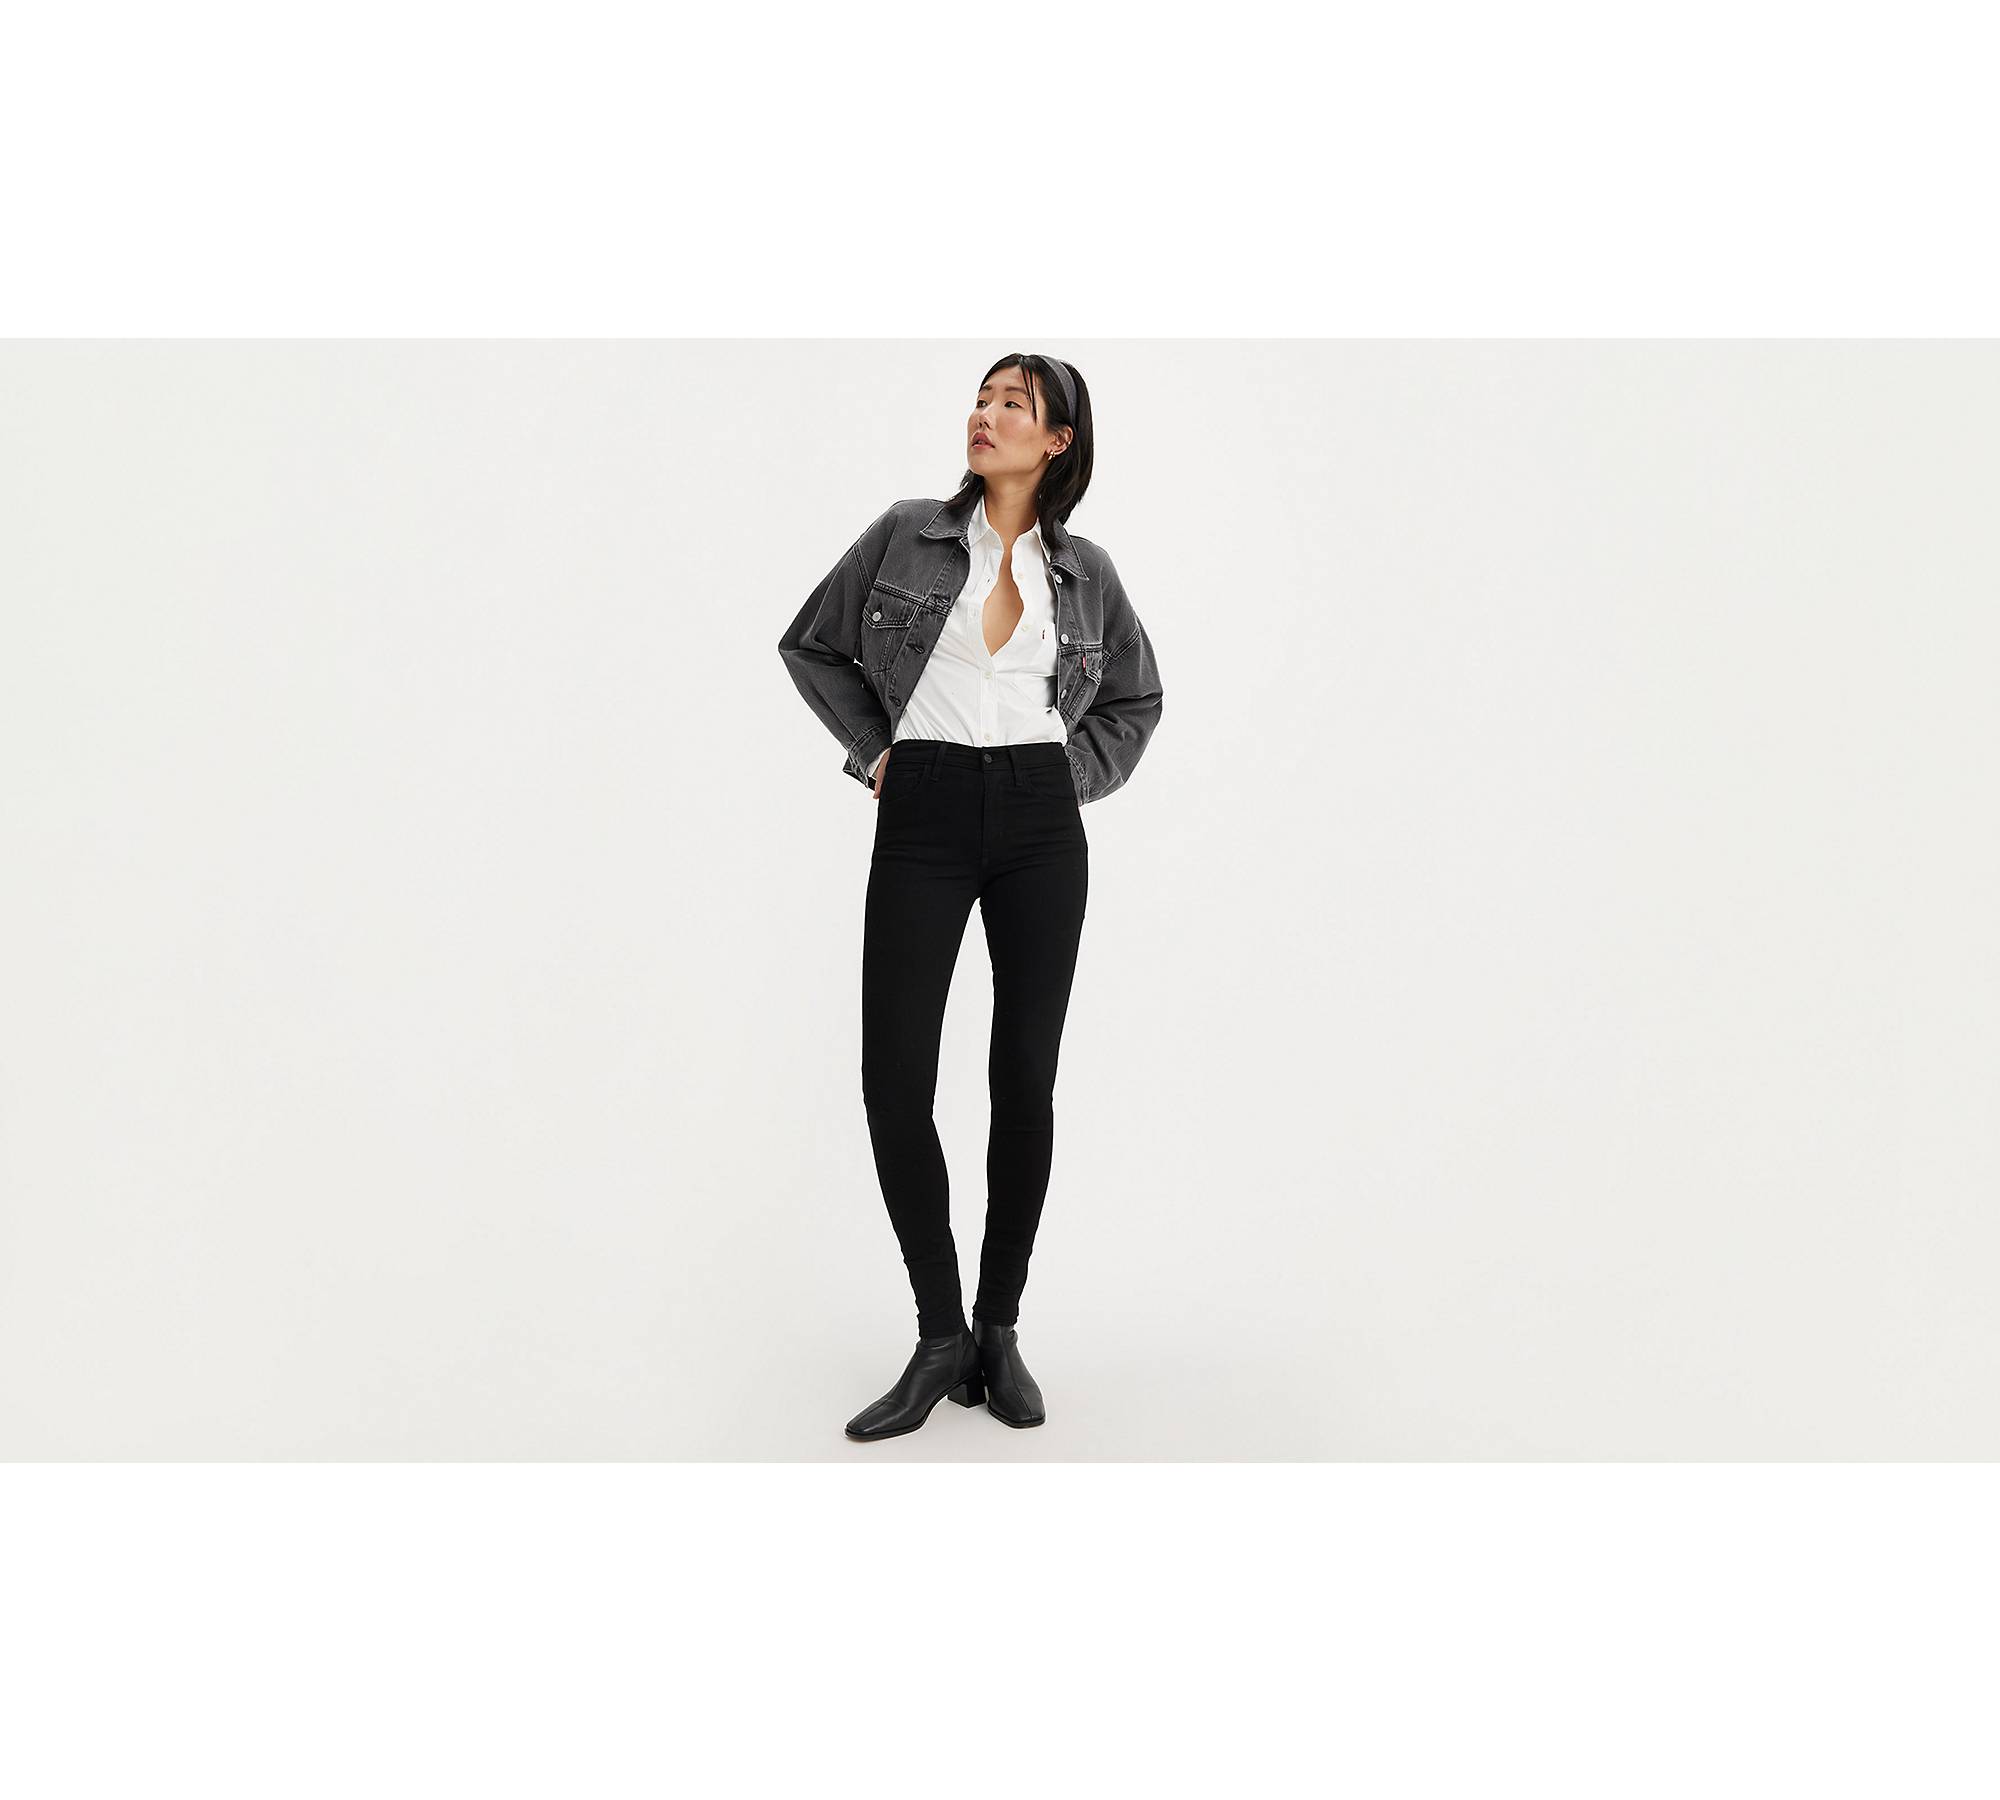  Women's Sequin Side Stripe Black Skinny Jeans High